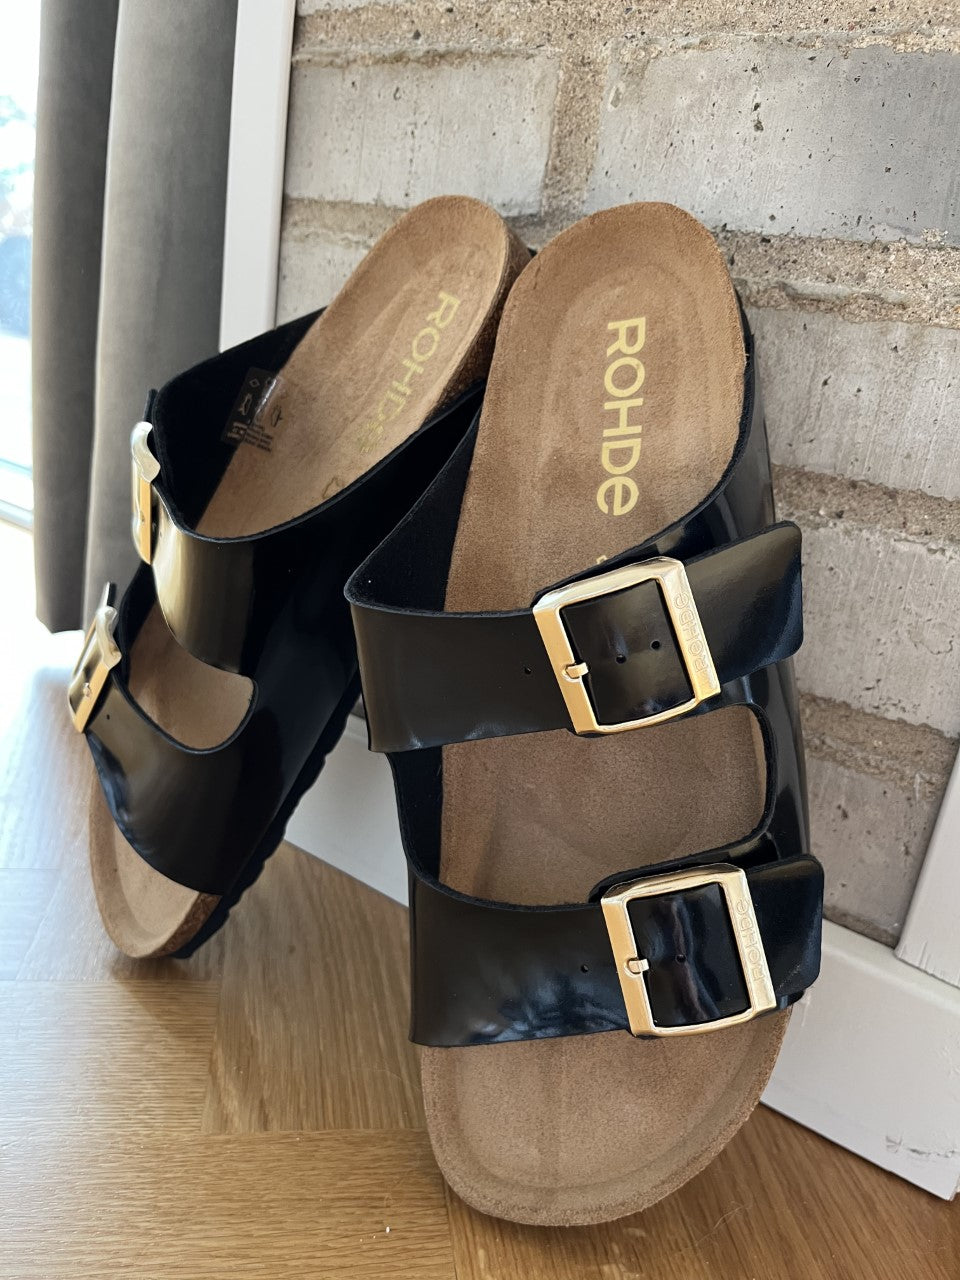 Rohde - Sort lak sandal